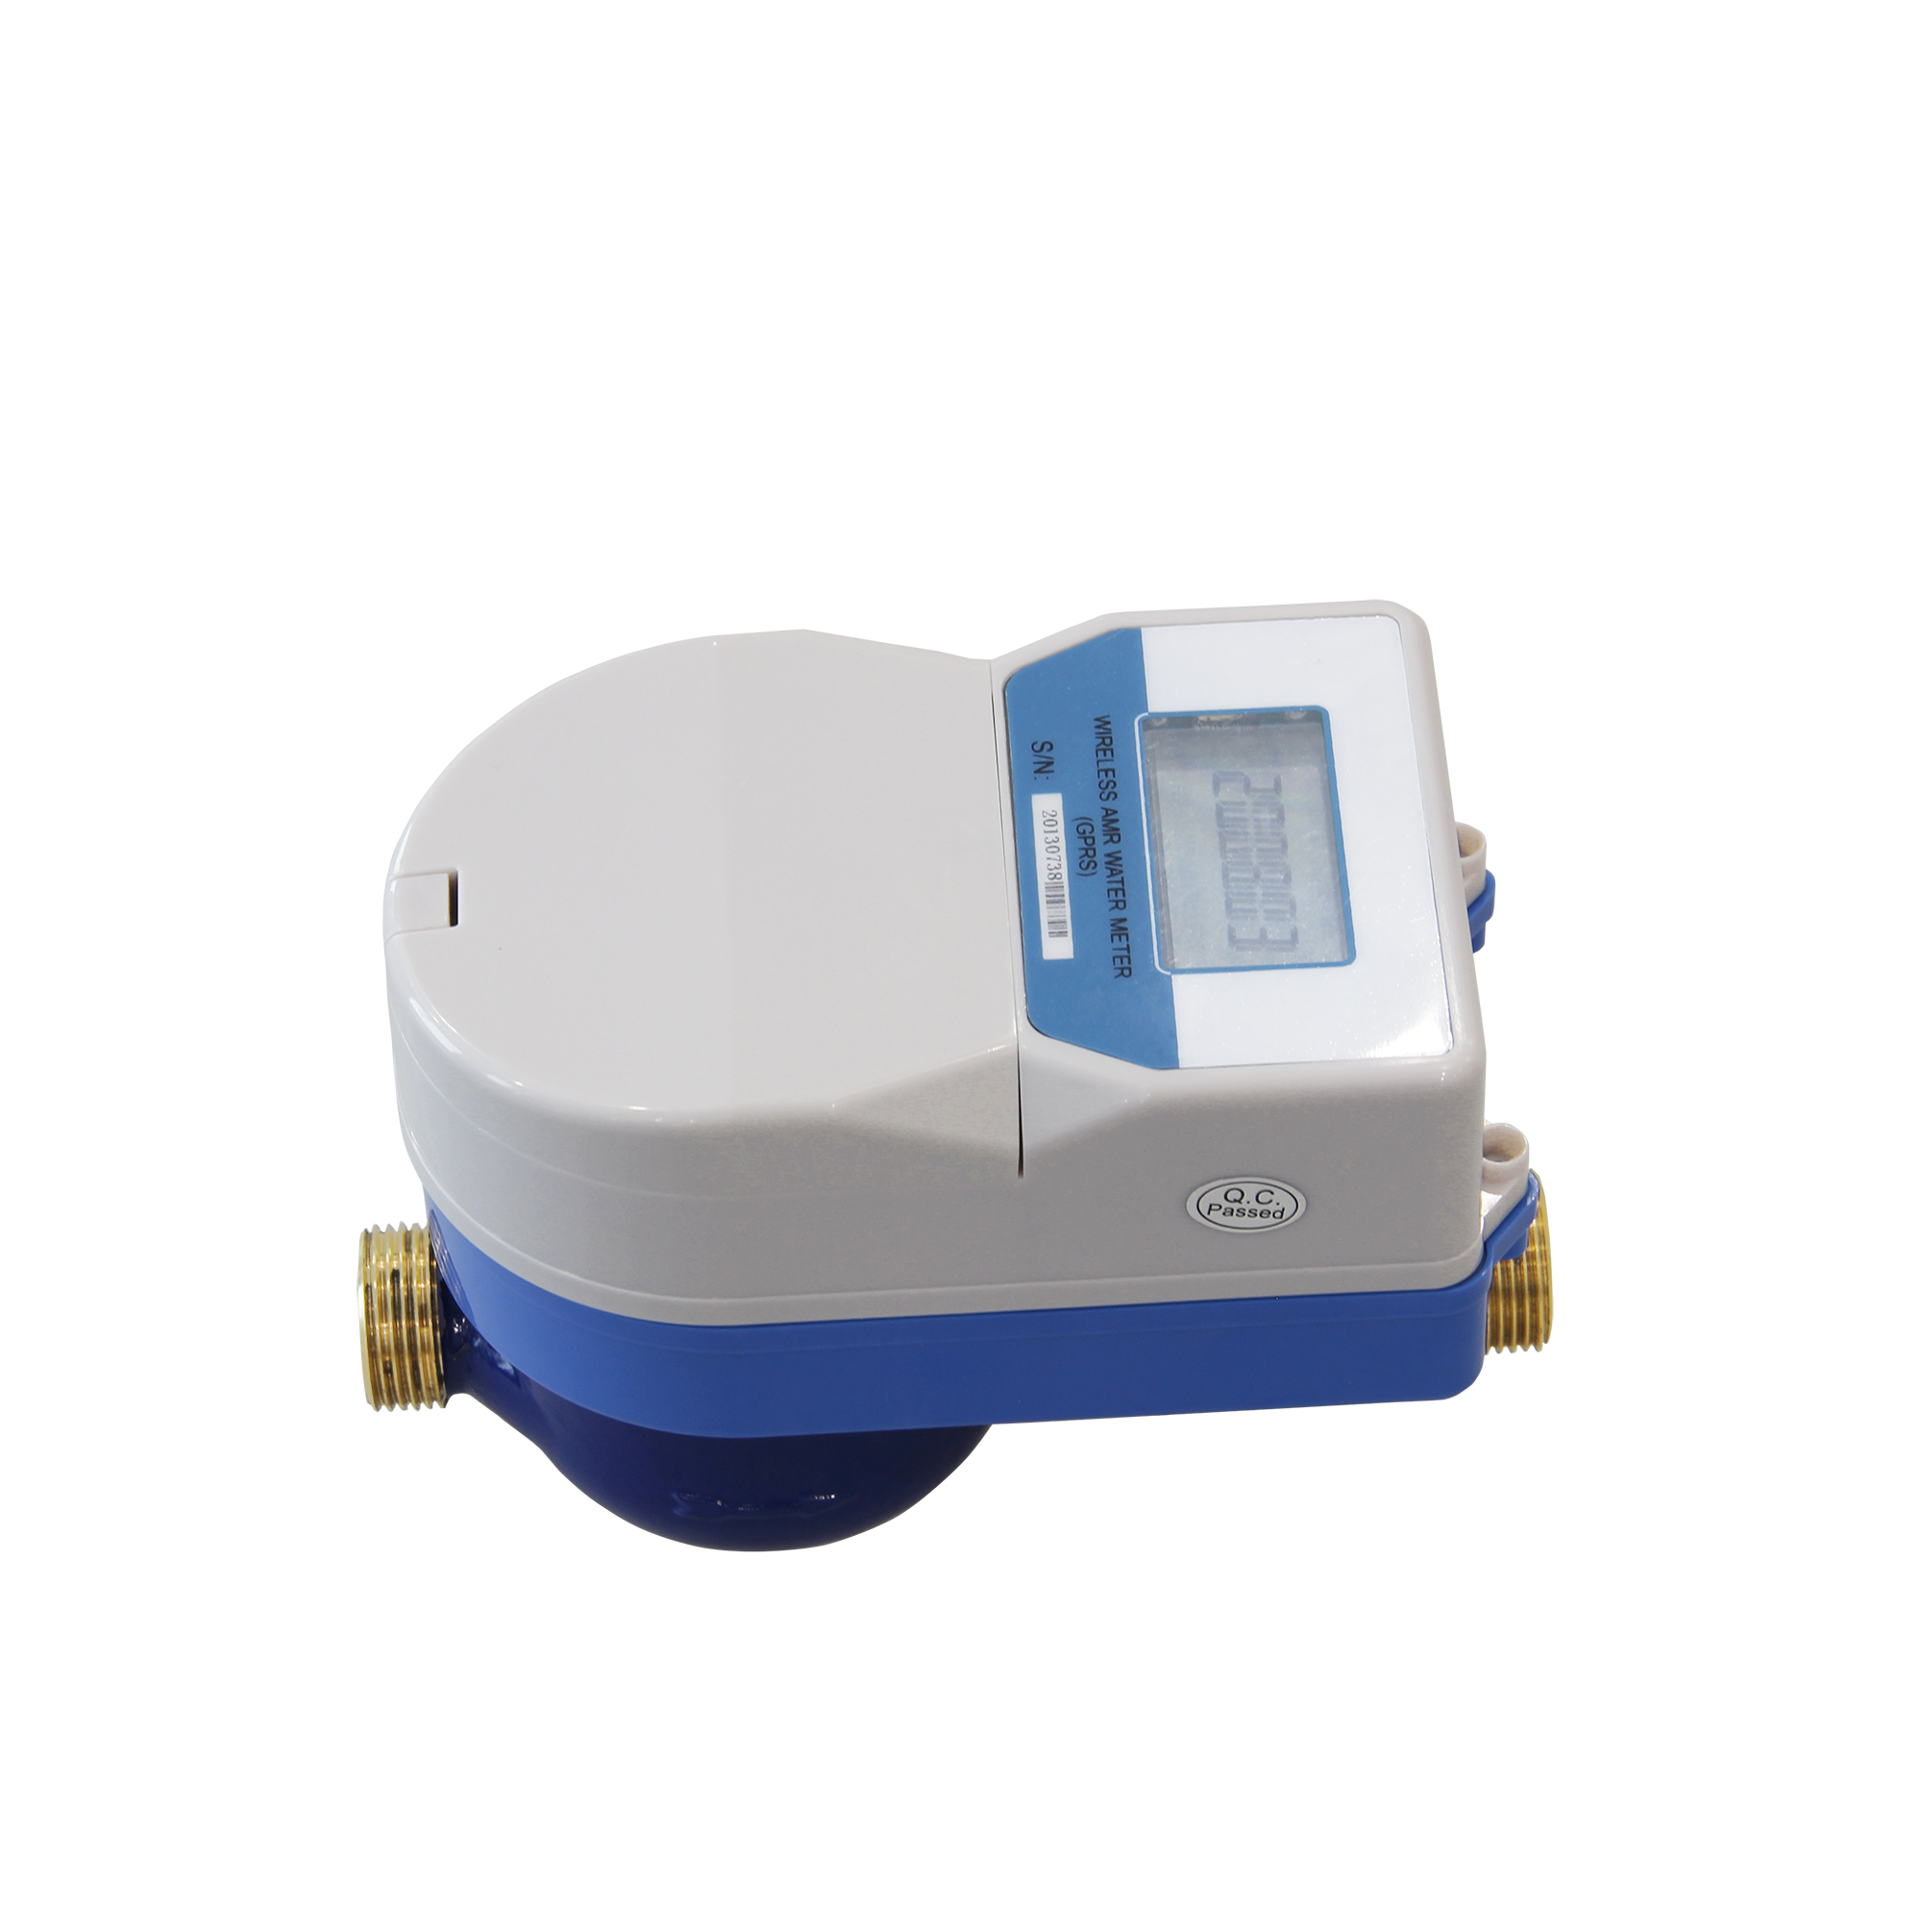 GPRS wireless valve controlled water meter